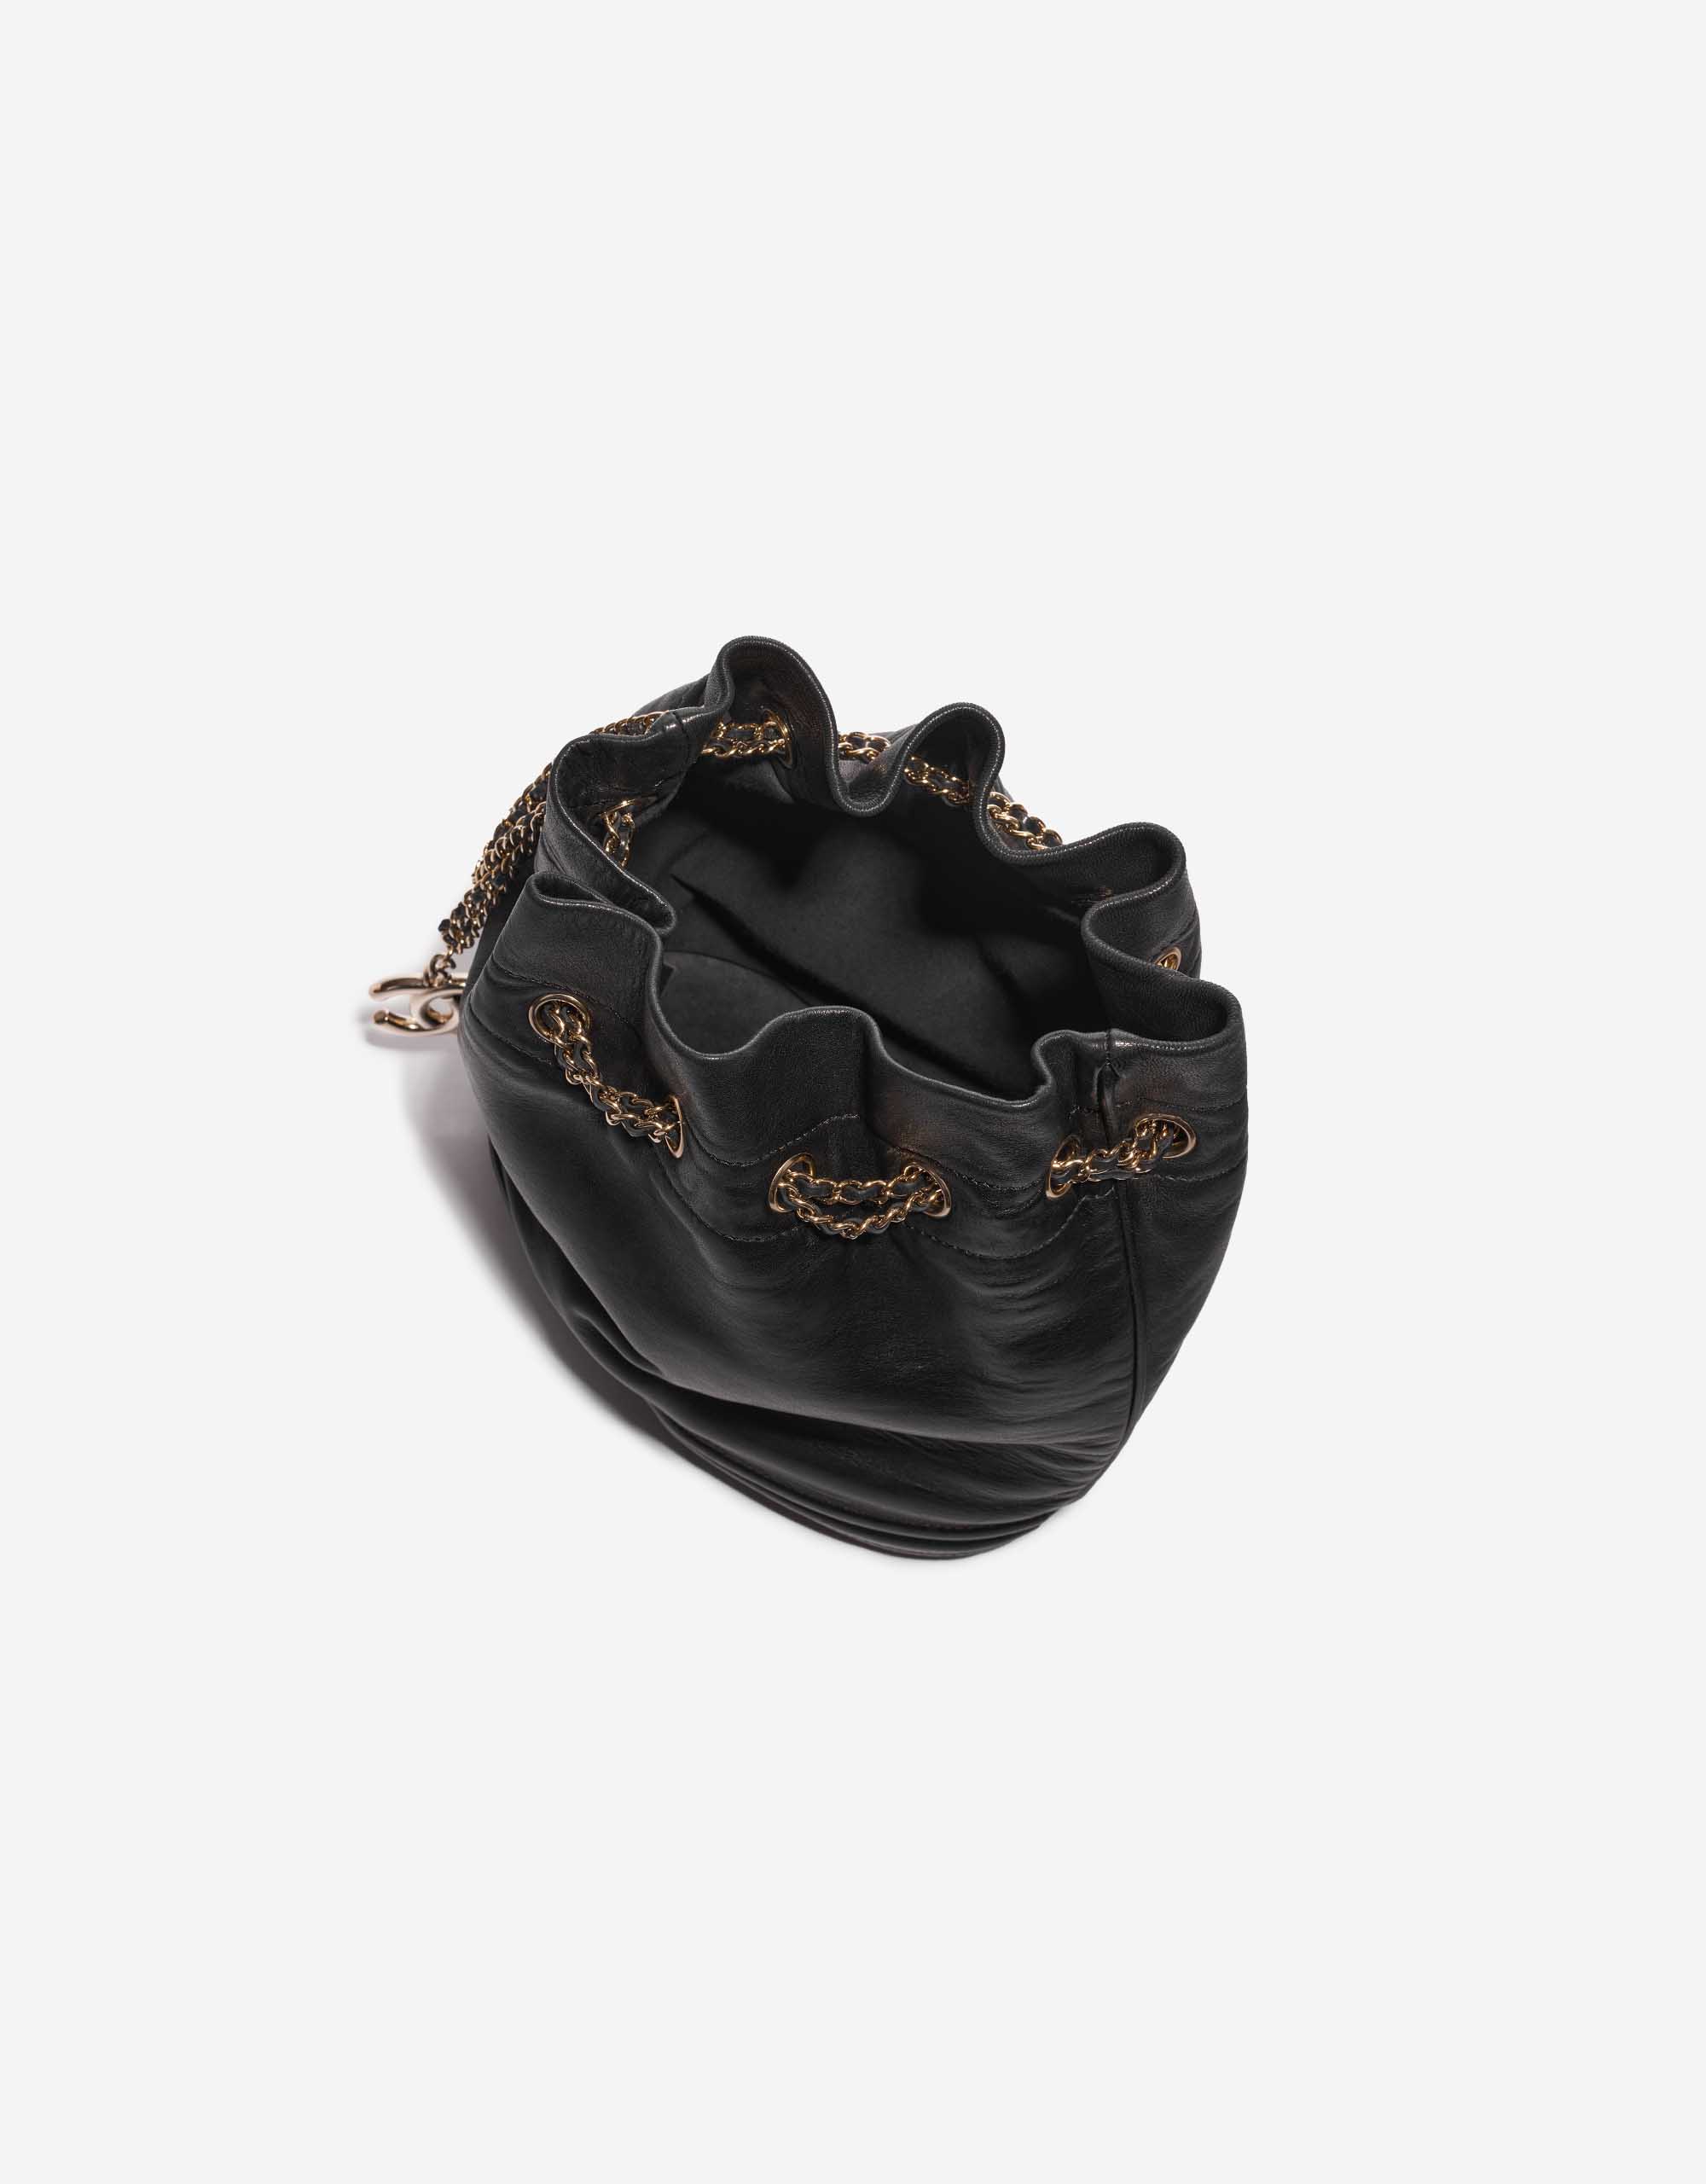 Pre-owned Chanel bag Drawstring Bucket Lamb Black Black Inside | Sell your designer bag on Saclab.com